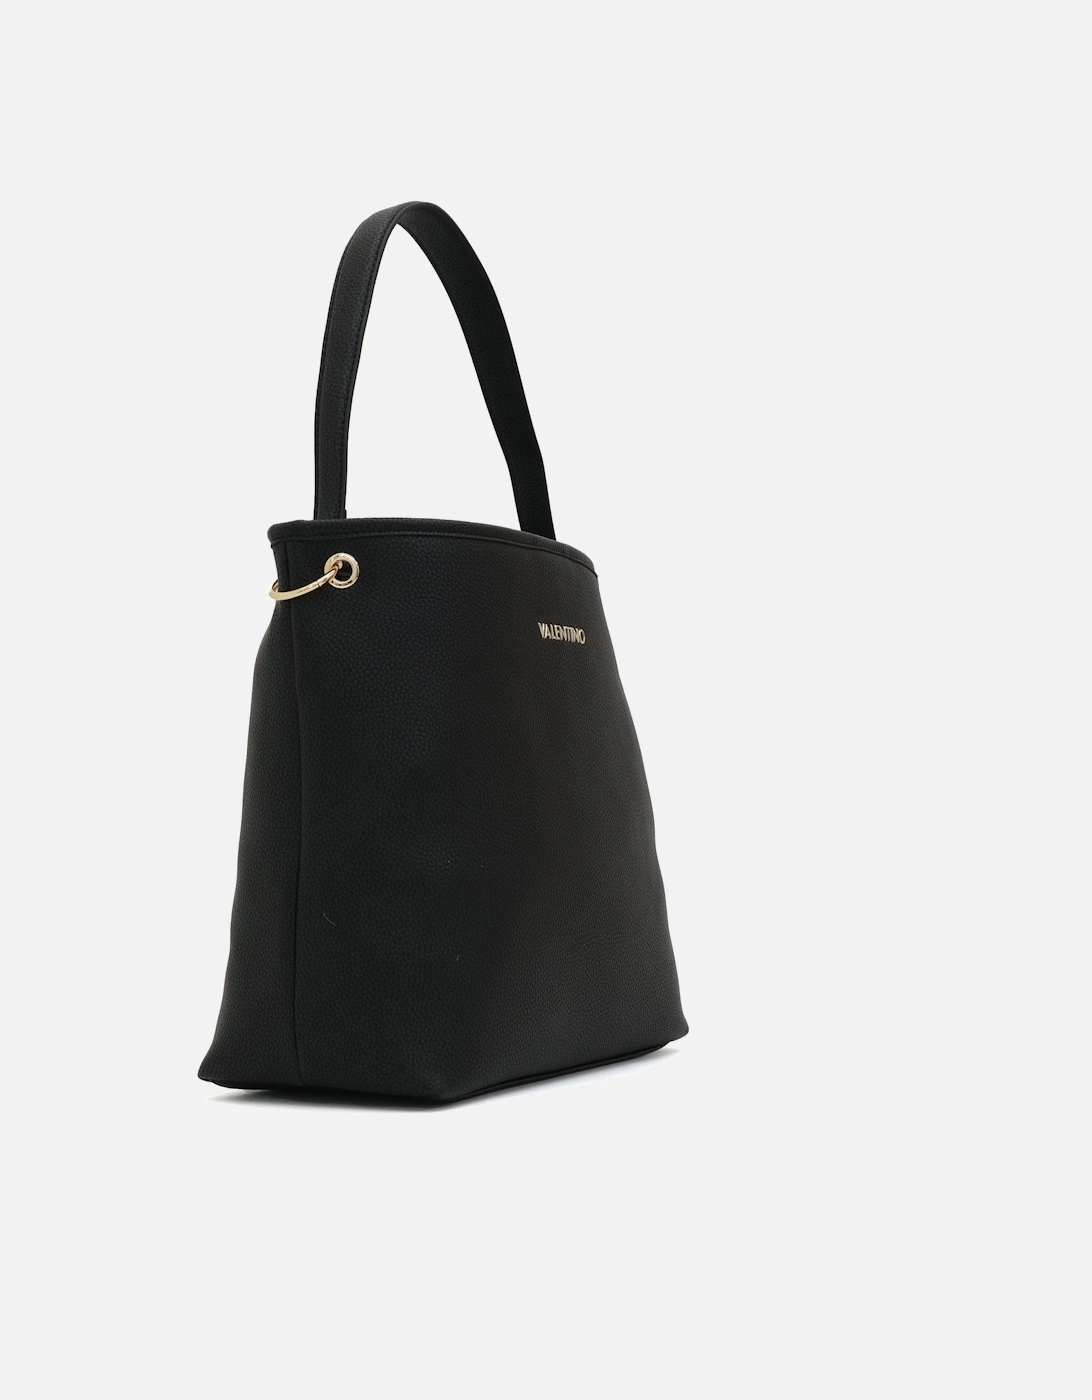 Brixton Black Shopper Bag